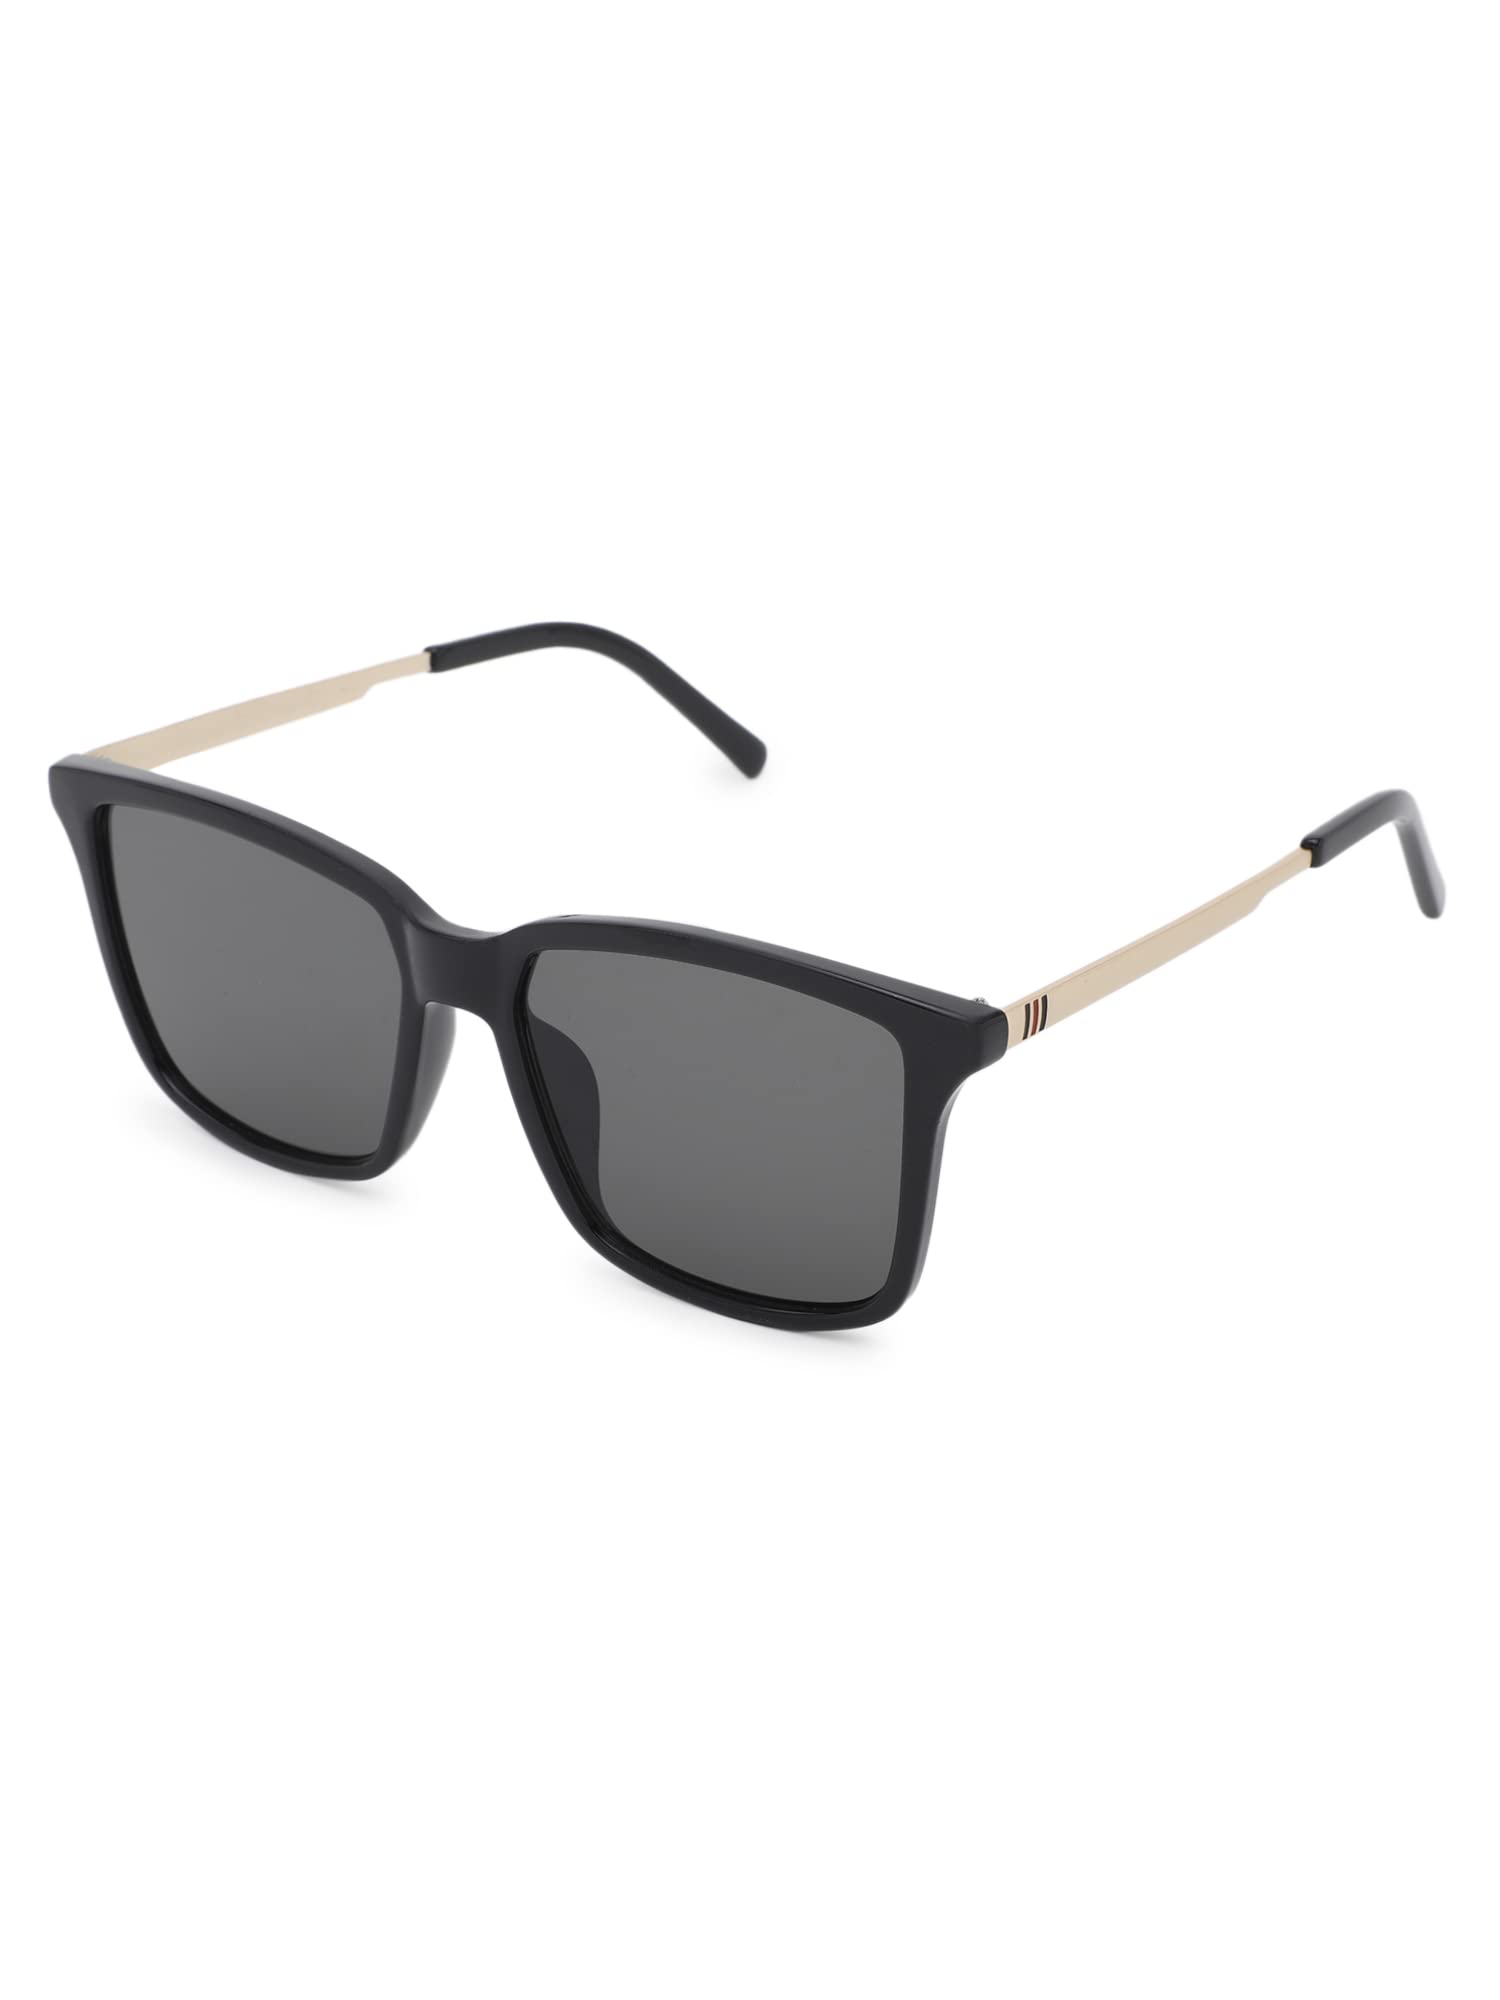 Intellilens Square UV Protected Sunglasses For Men & Women | Goggles